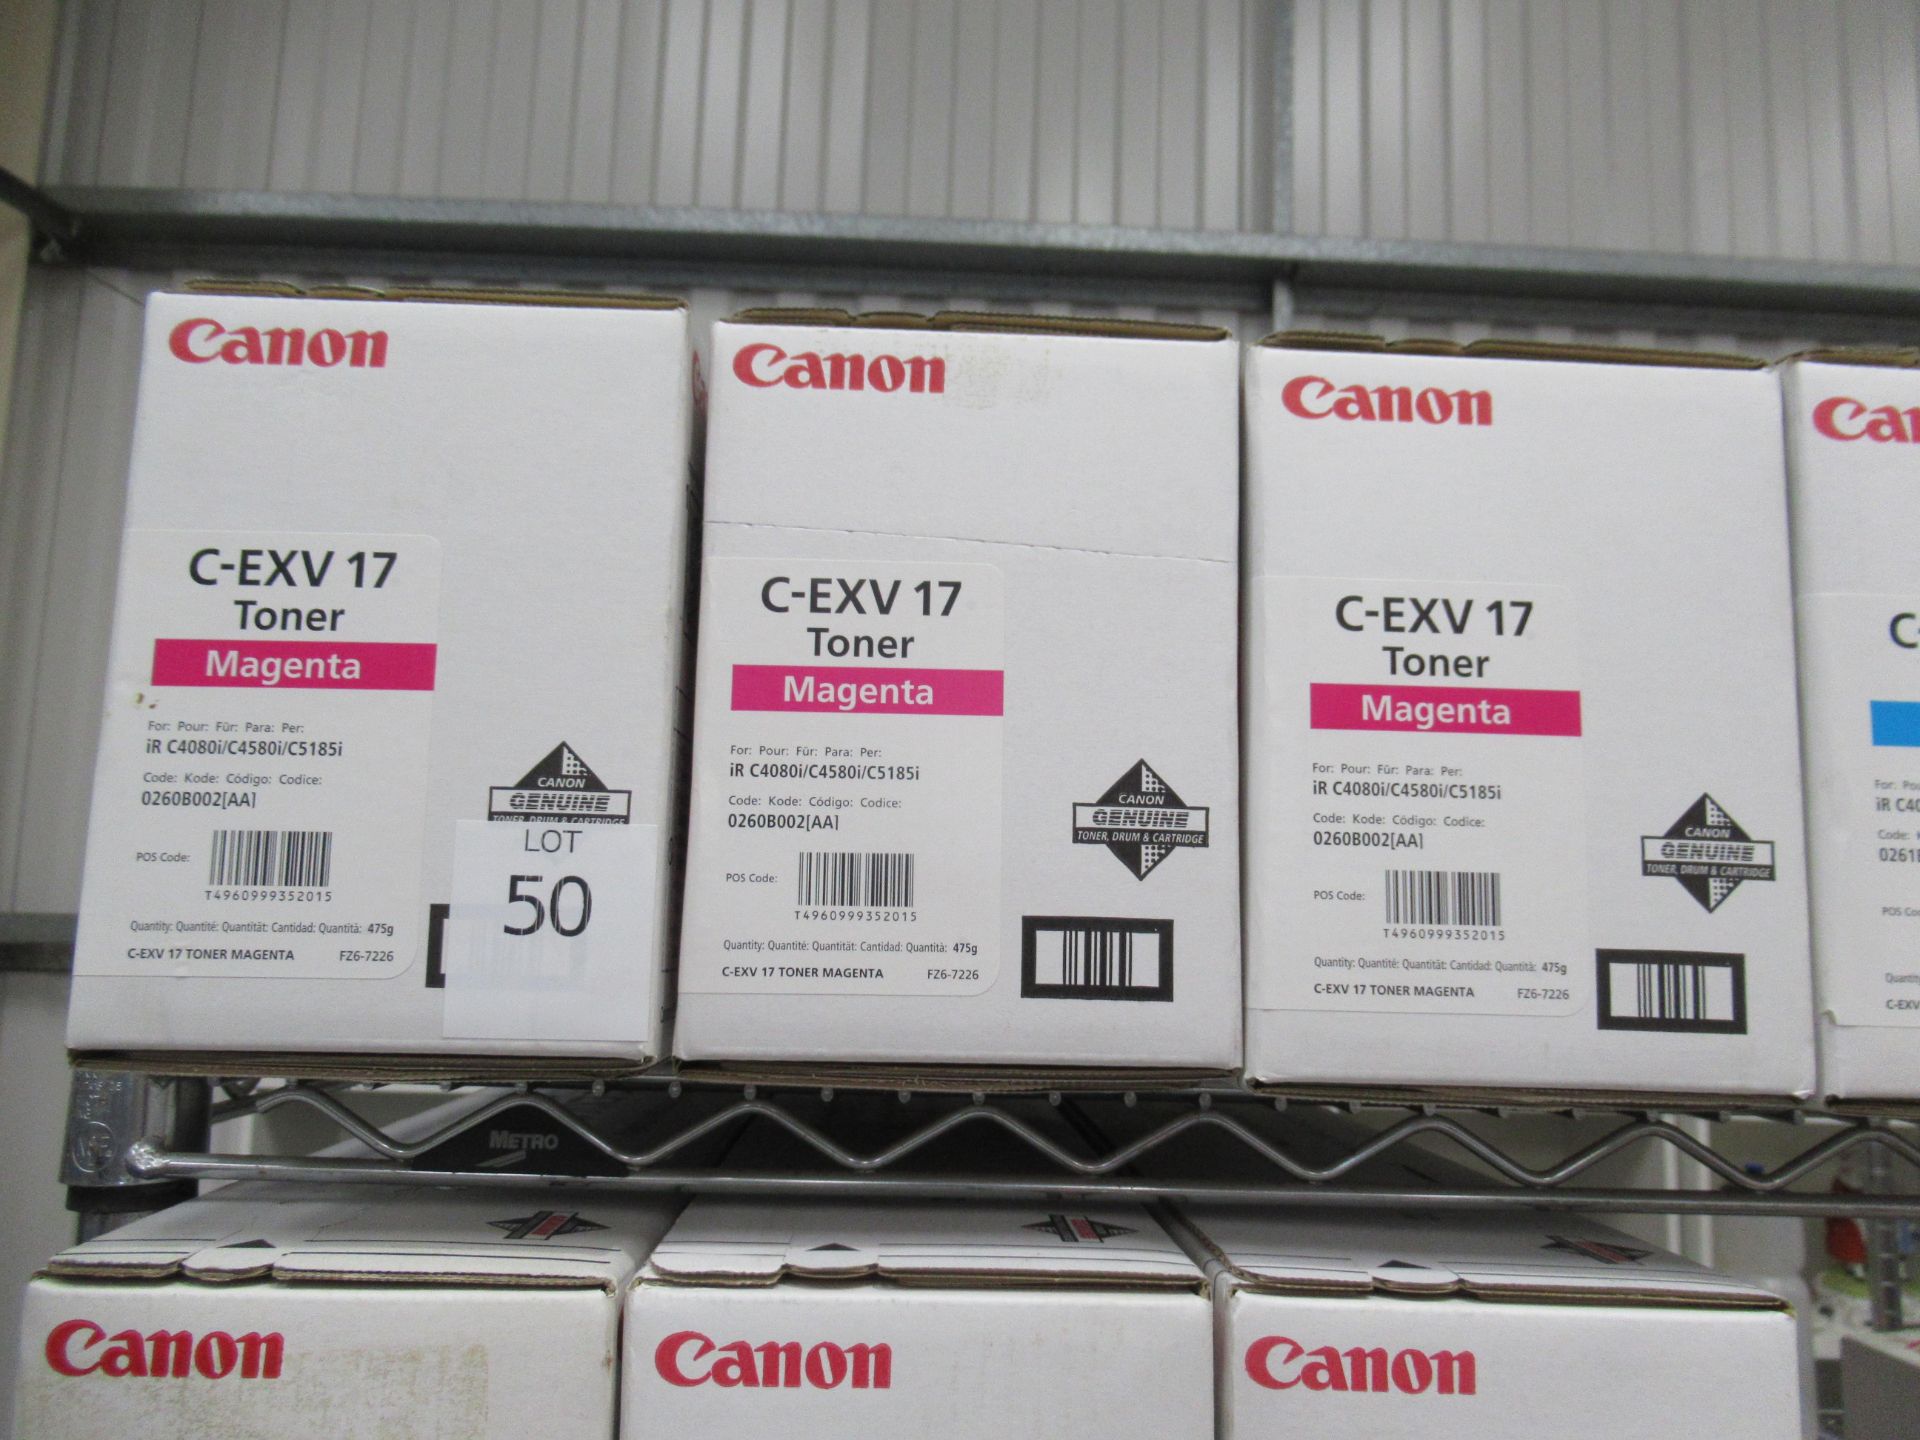 5x Canon C-EXV17 Toner Cartridges - Image 2 of 3